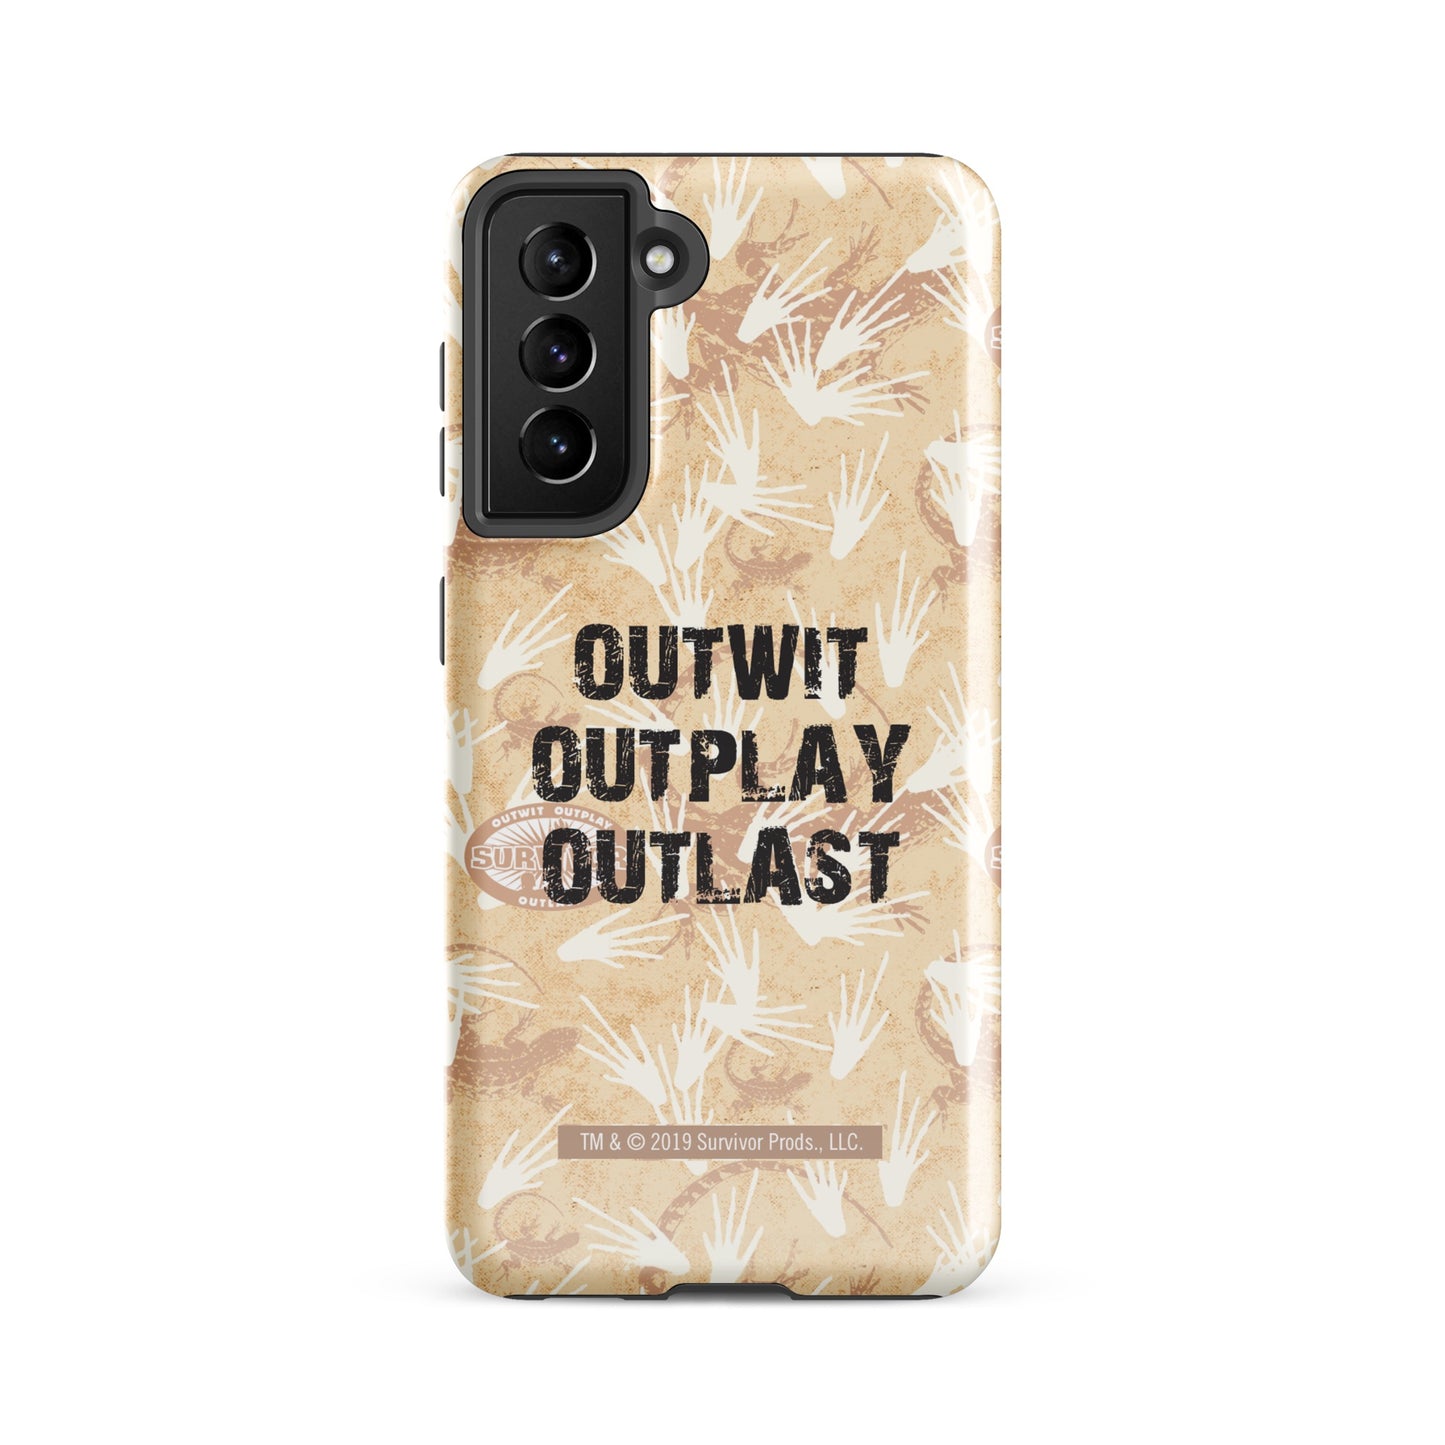 Survivor Outwit, Outplay, Outlast Tough Phone Case - Samsung